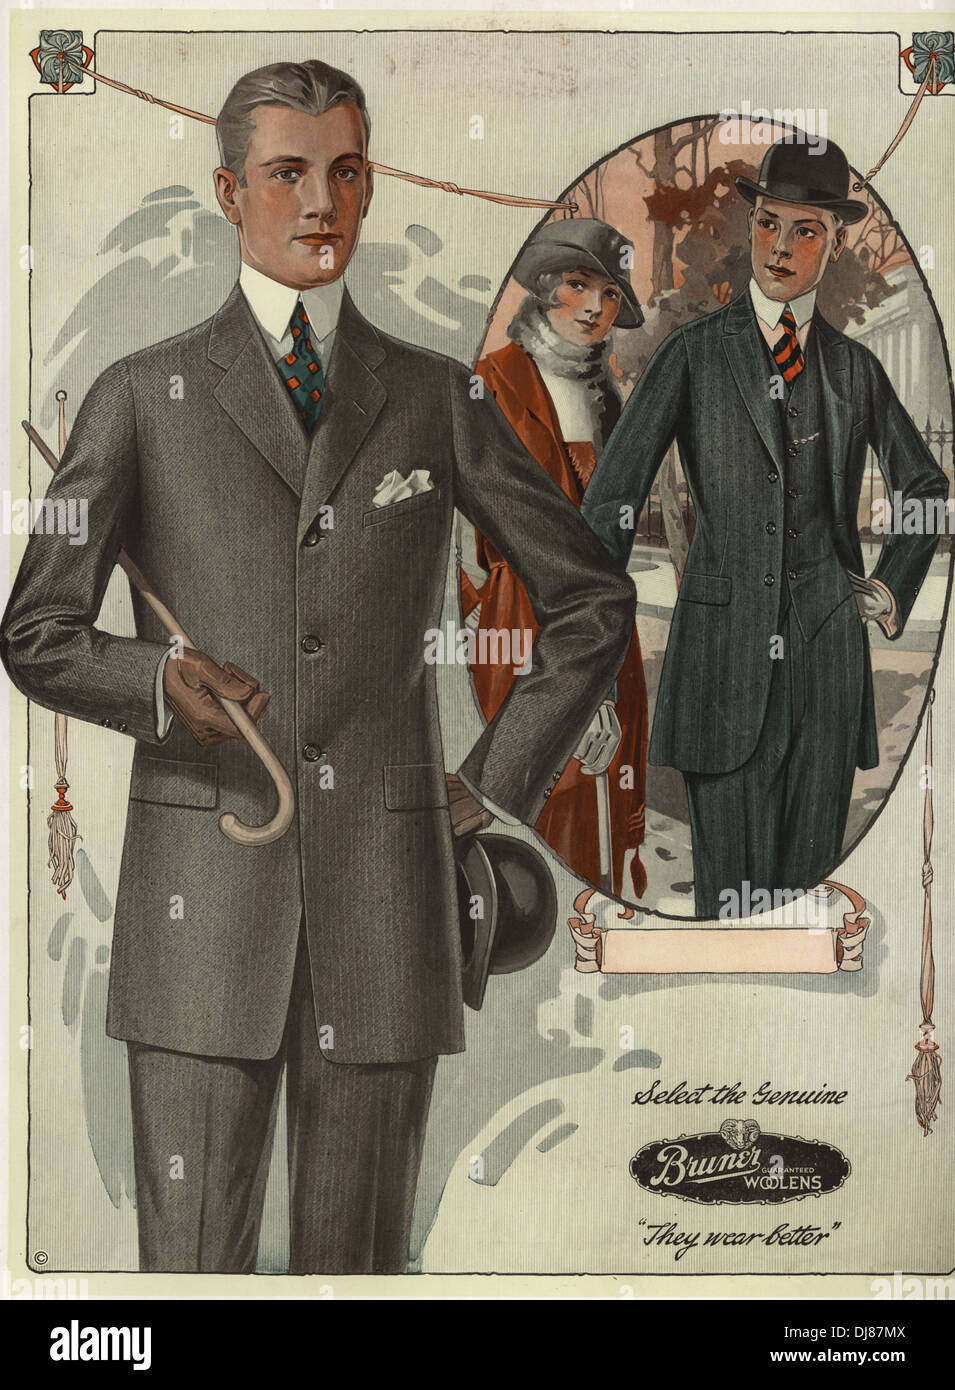 1920 fashion fotografías e imágenes de alta resolución - Alamy